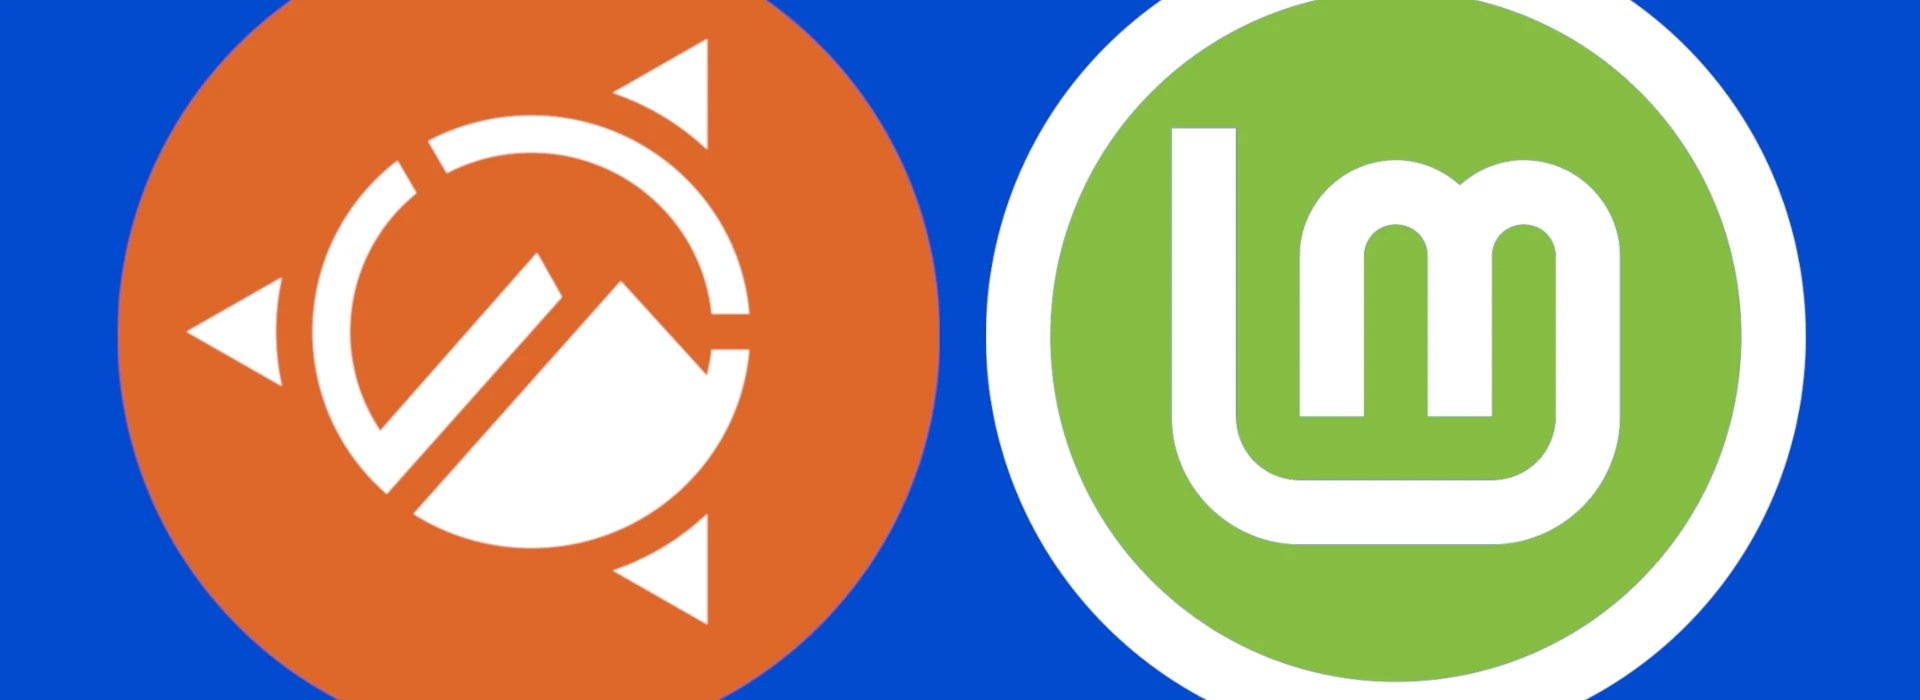 Ubuntu Cinnamon vs Linux Mint (copertina)